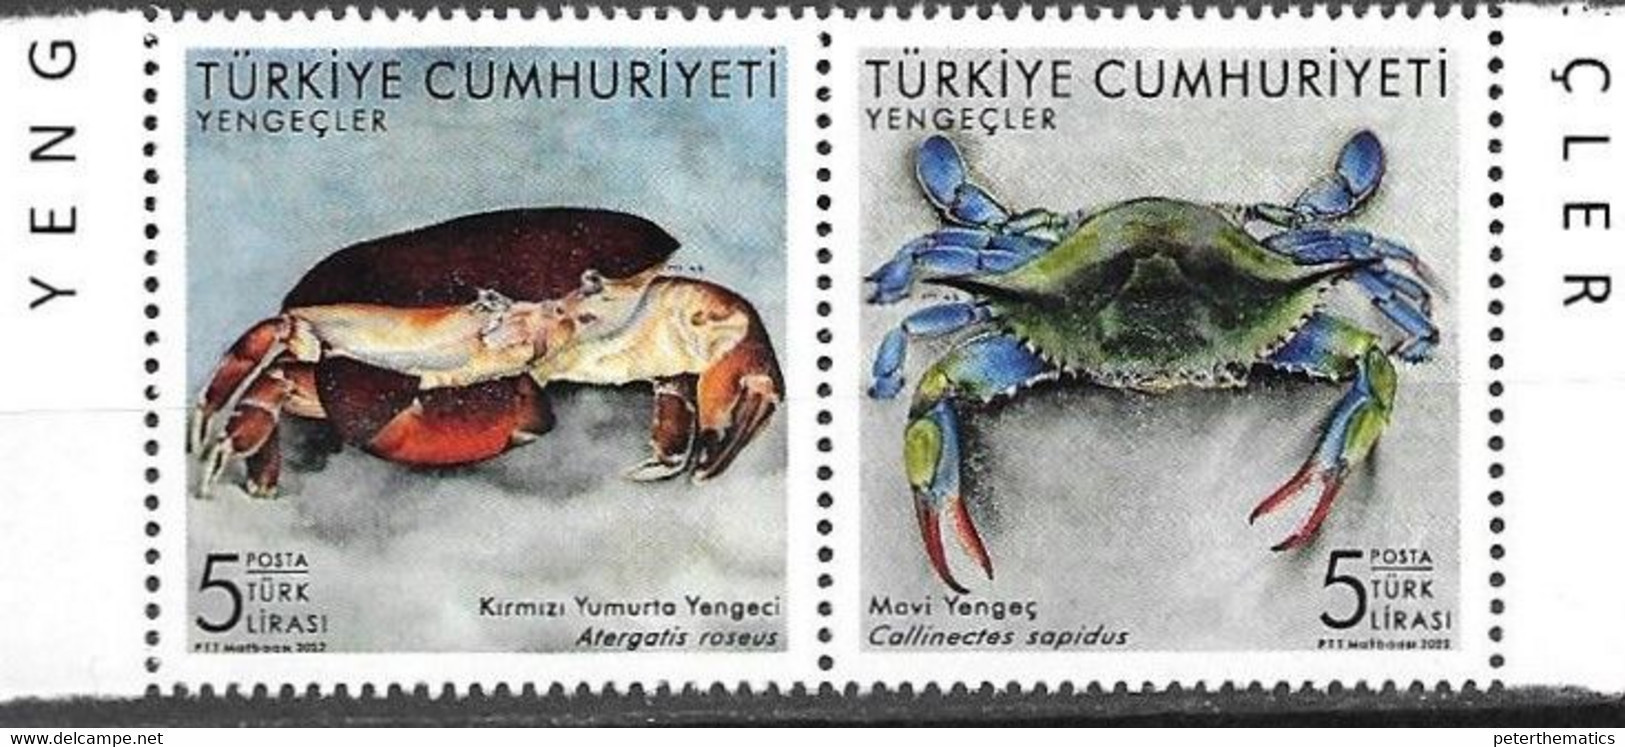 TURKEY, 2022, MNH, CRABS, MARINE LIFE, 2v - Crustaceans